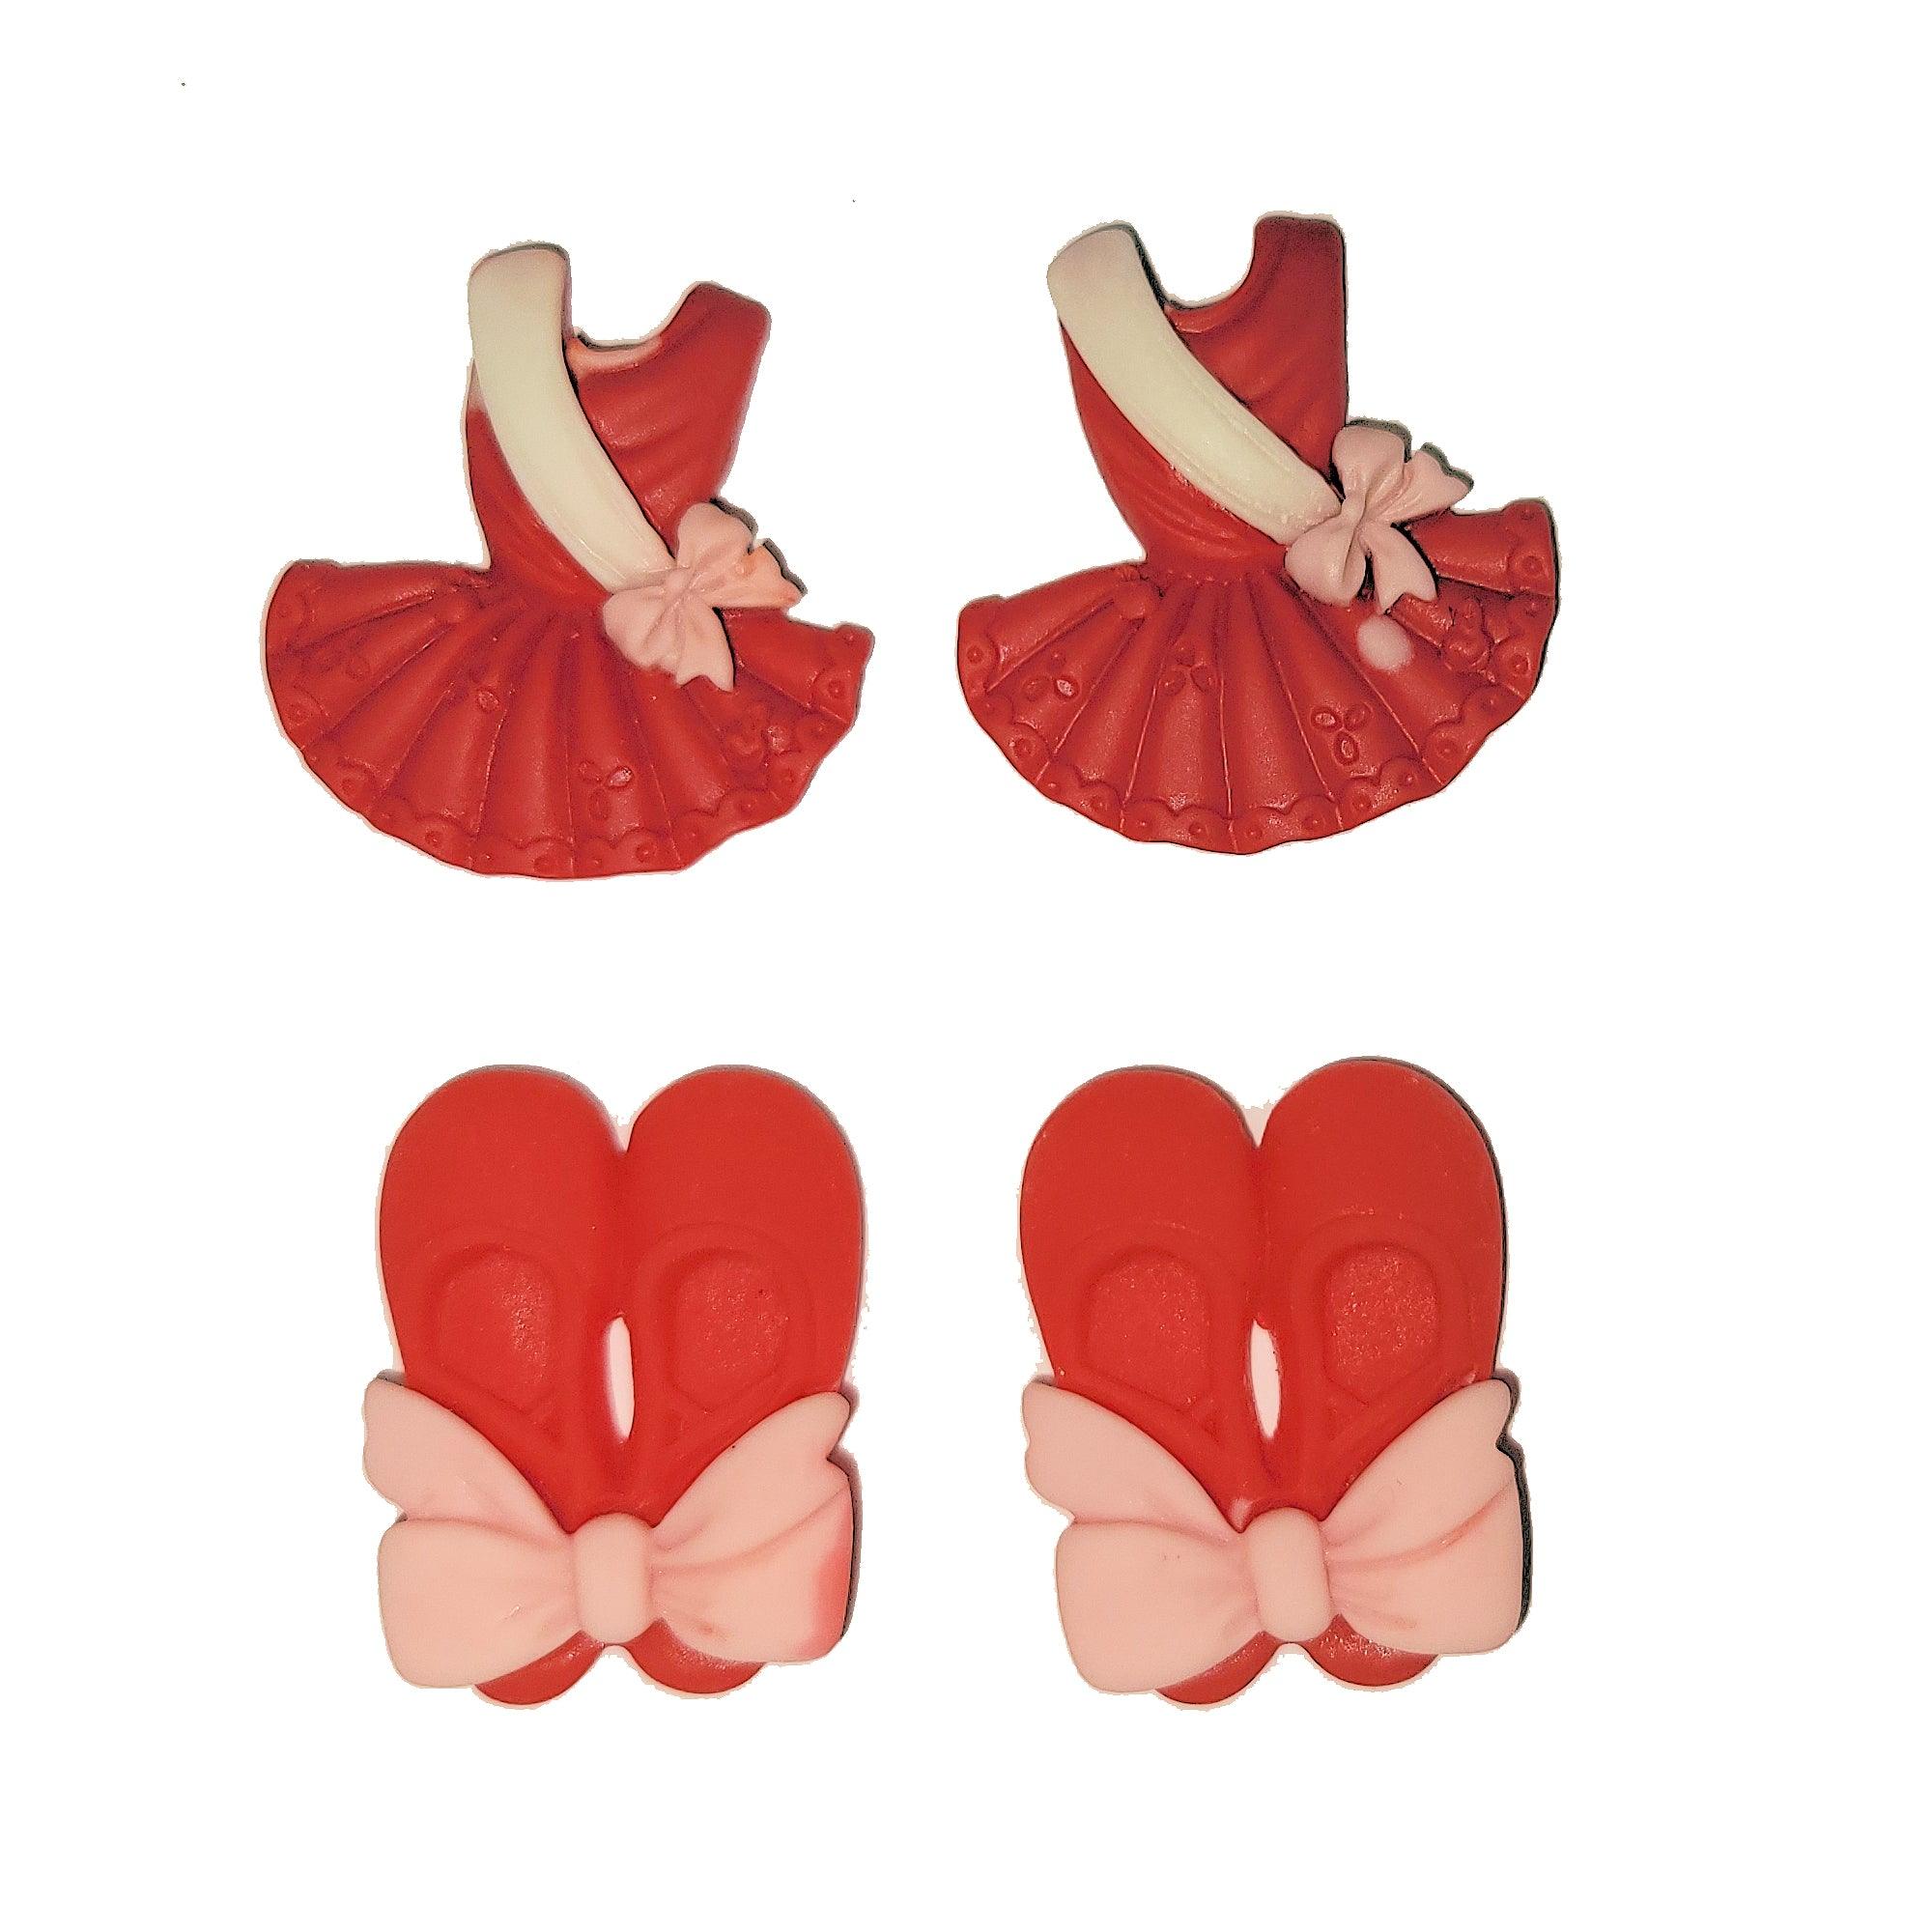 Ballerina Collection Red Ballerina Dress & Ballet Shoes Flatback Buttons by SSC Designs - Pkg. of 4